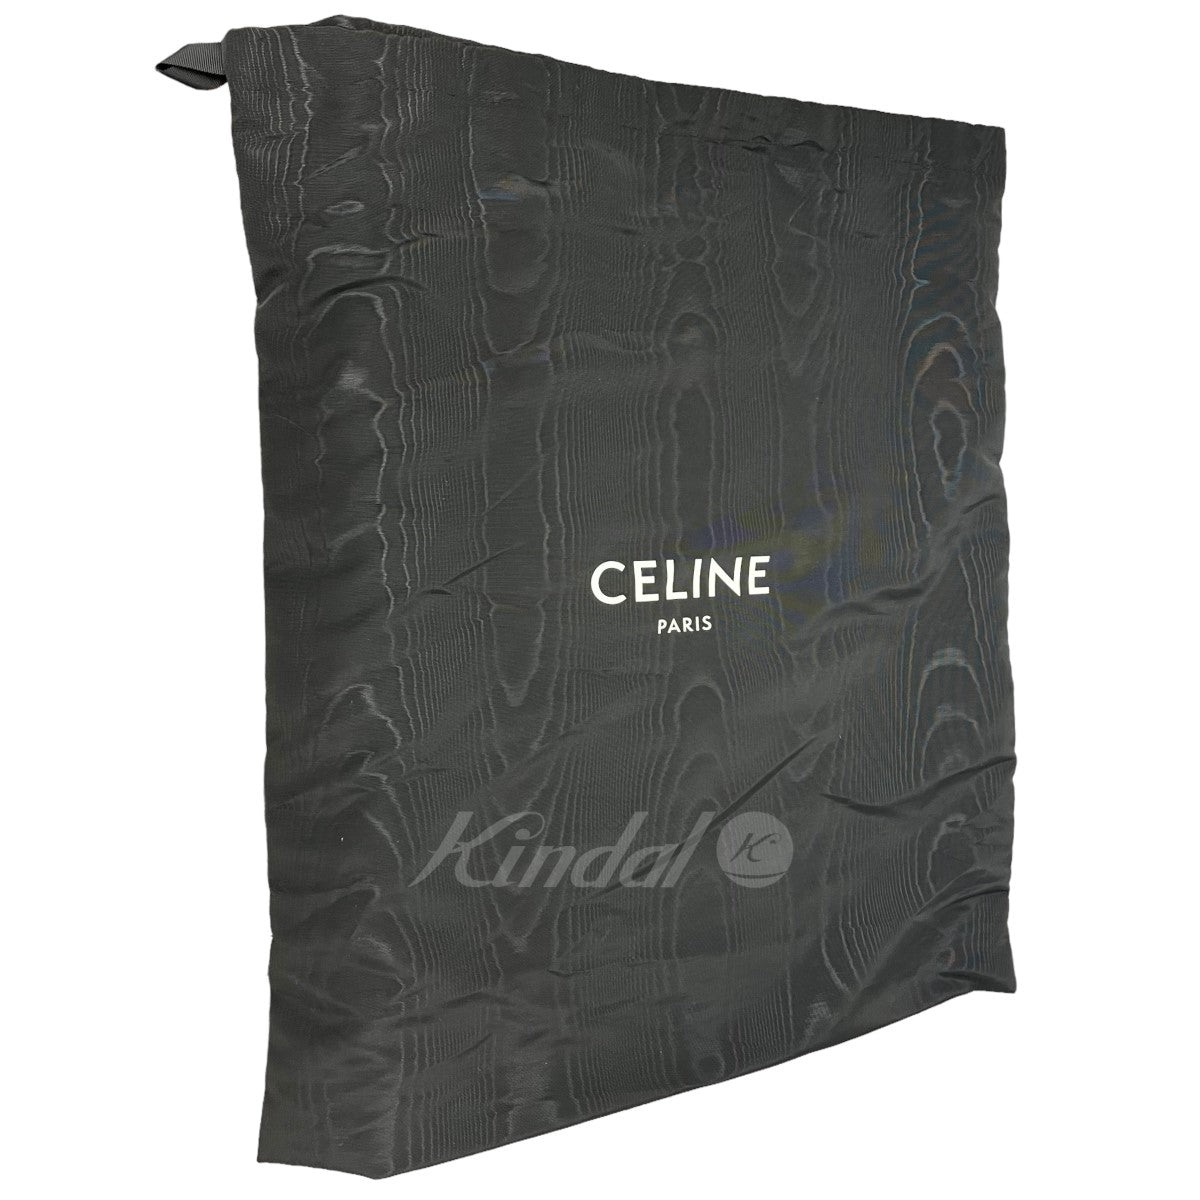 CELINE(セリーヌ) サテンドカーフスキン ラージ16(セーズ)バッグ 